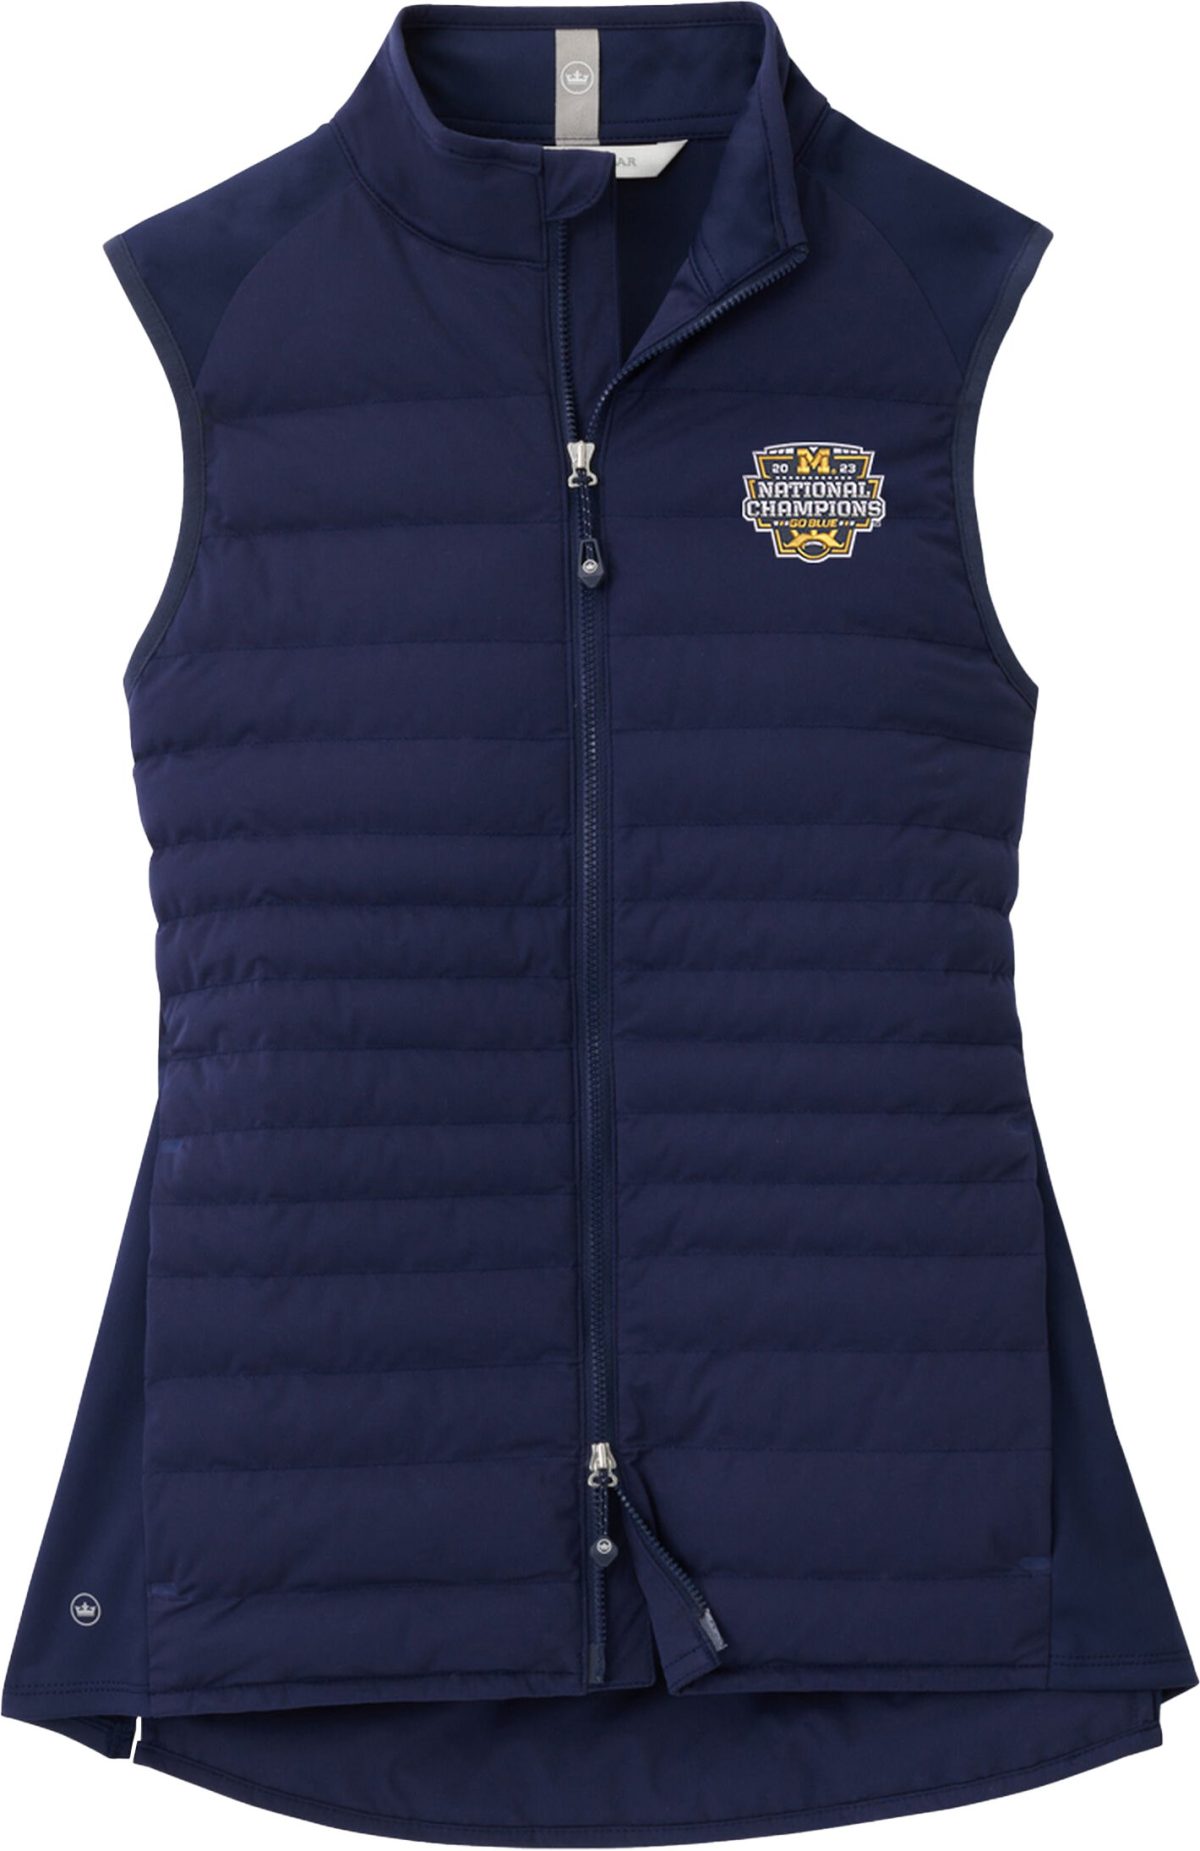 Peter Millar Women's University Of Michigan National Champion Fuse Hybrid Golf Vest, 100% Polyester in Navy, Size S